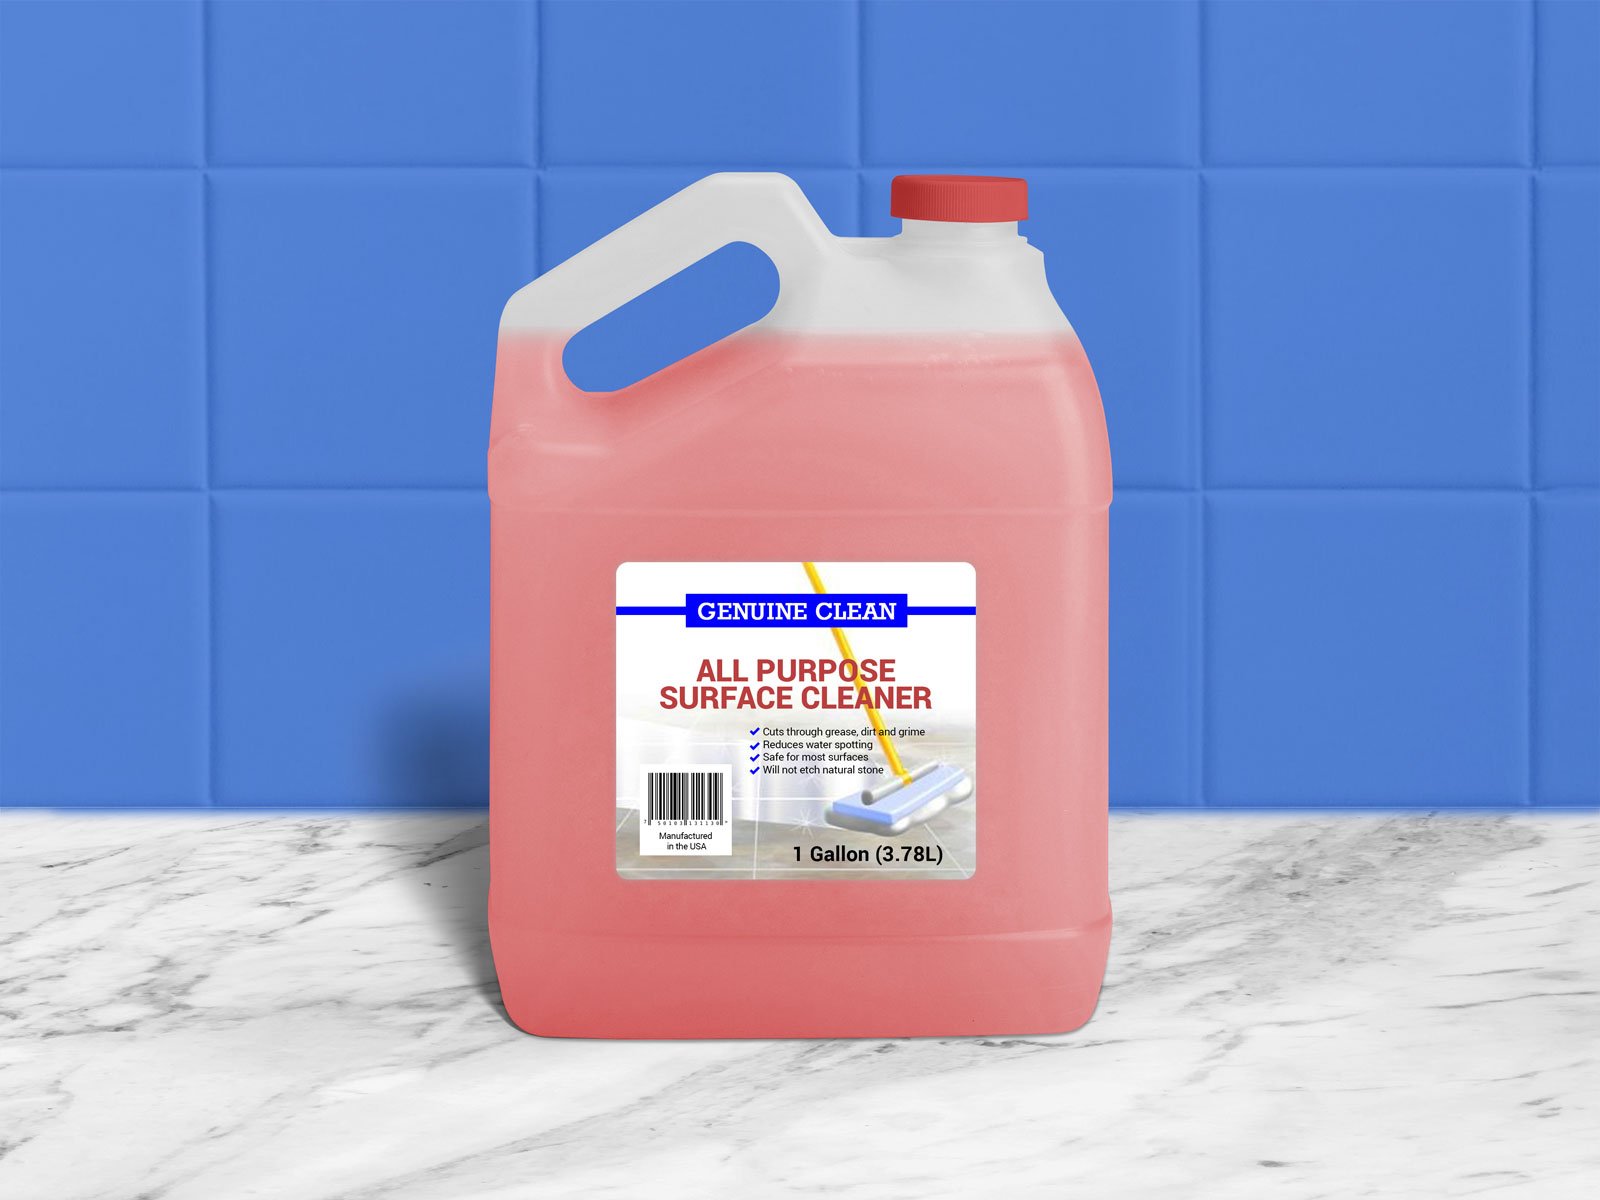 Free 1 Gallon HDPE Plastic Liquid Bottle Mockup PSD | Designbolts